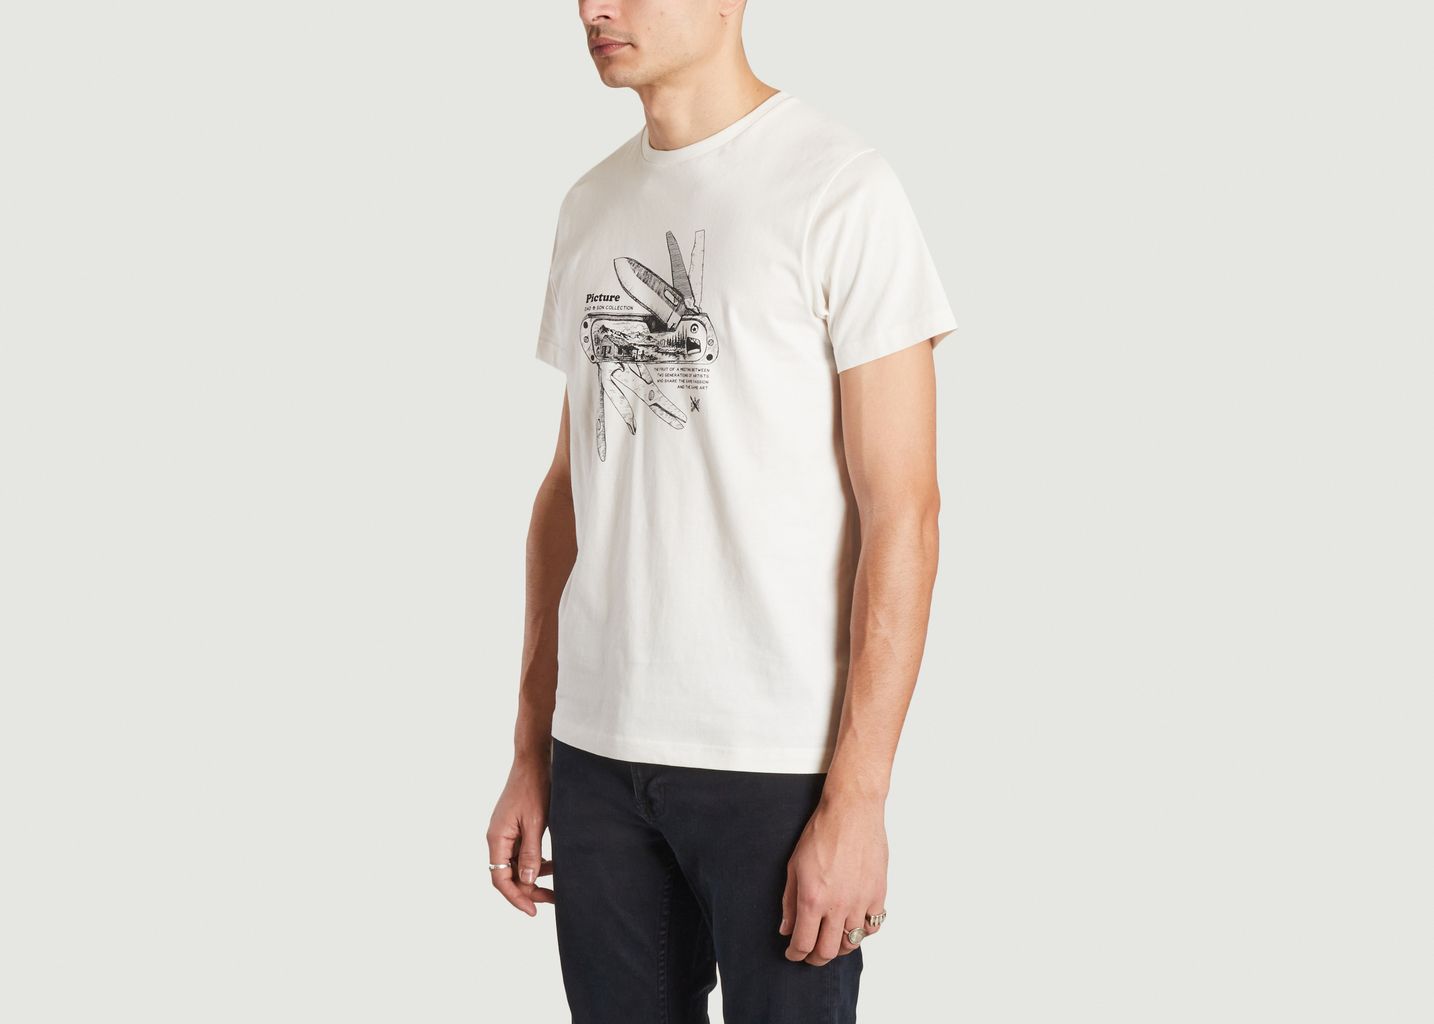 D&S Bear Branch T-shirt - Picture Organic